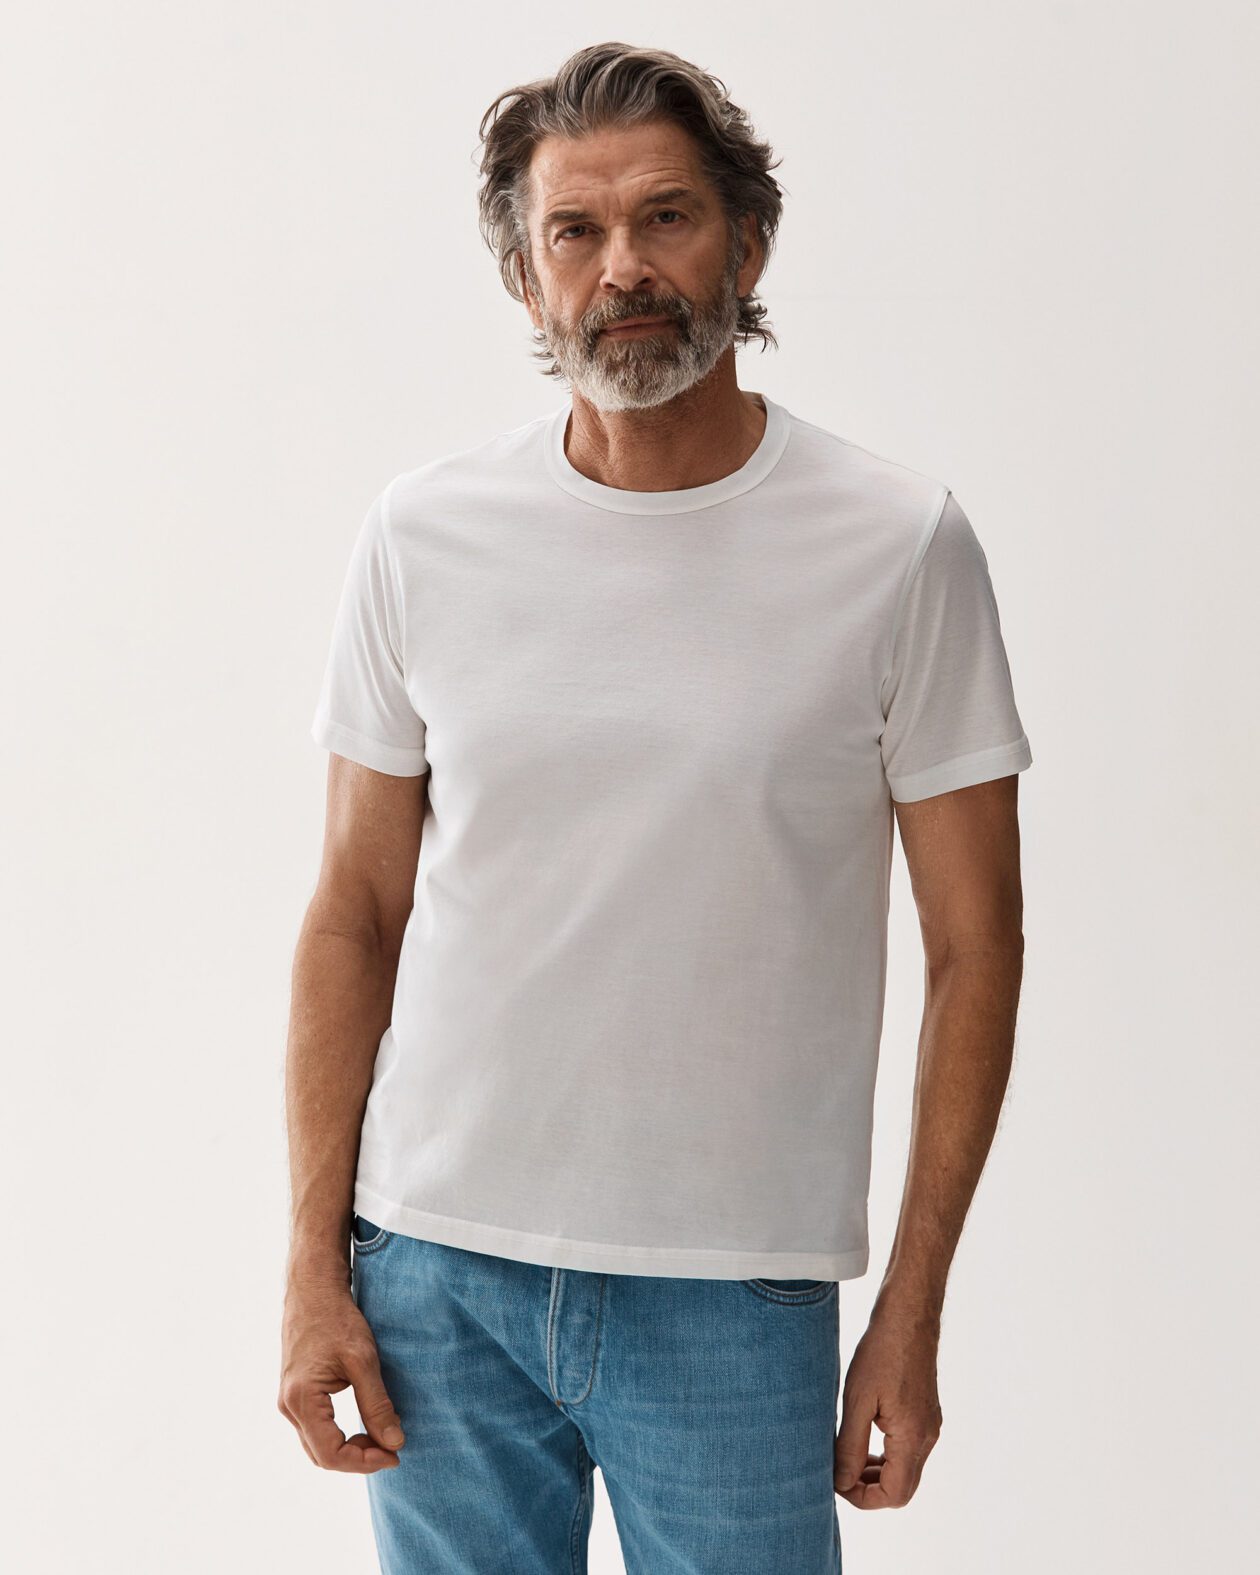 White mercerized cotton T-shirt